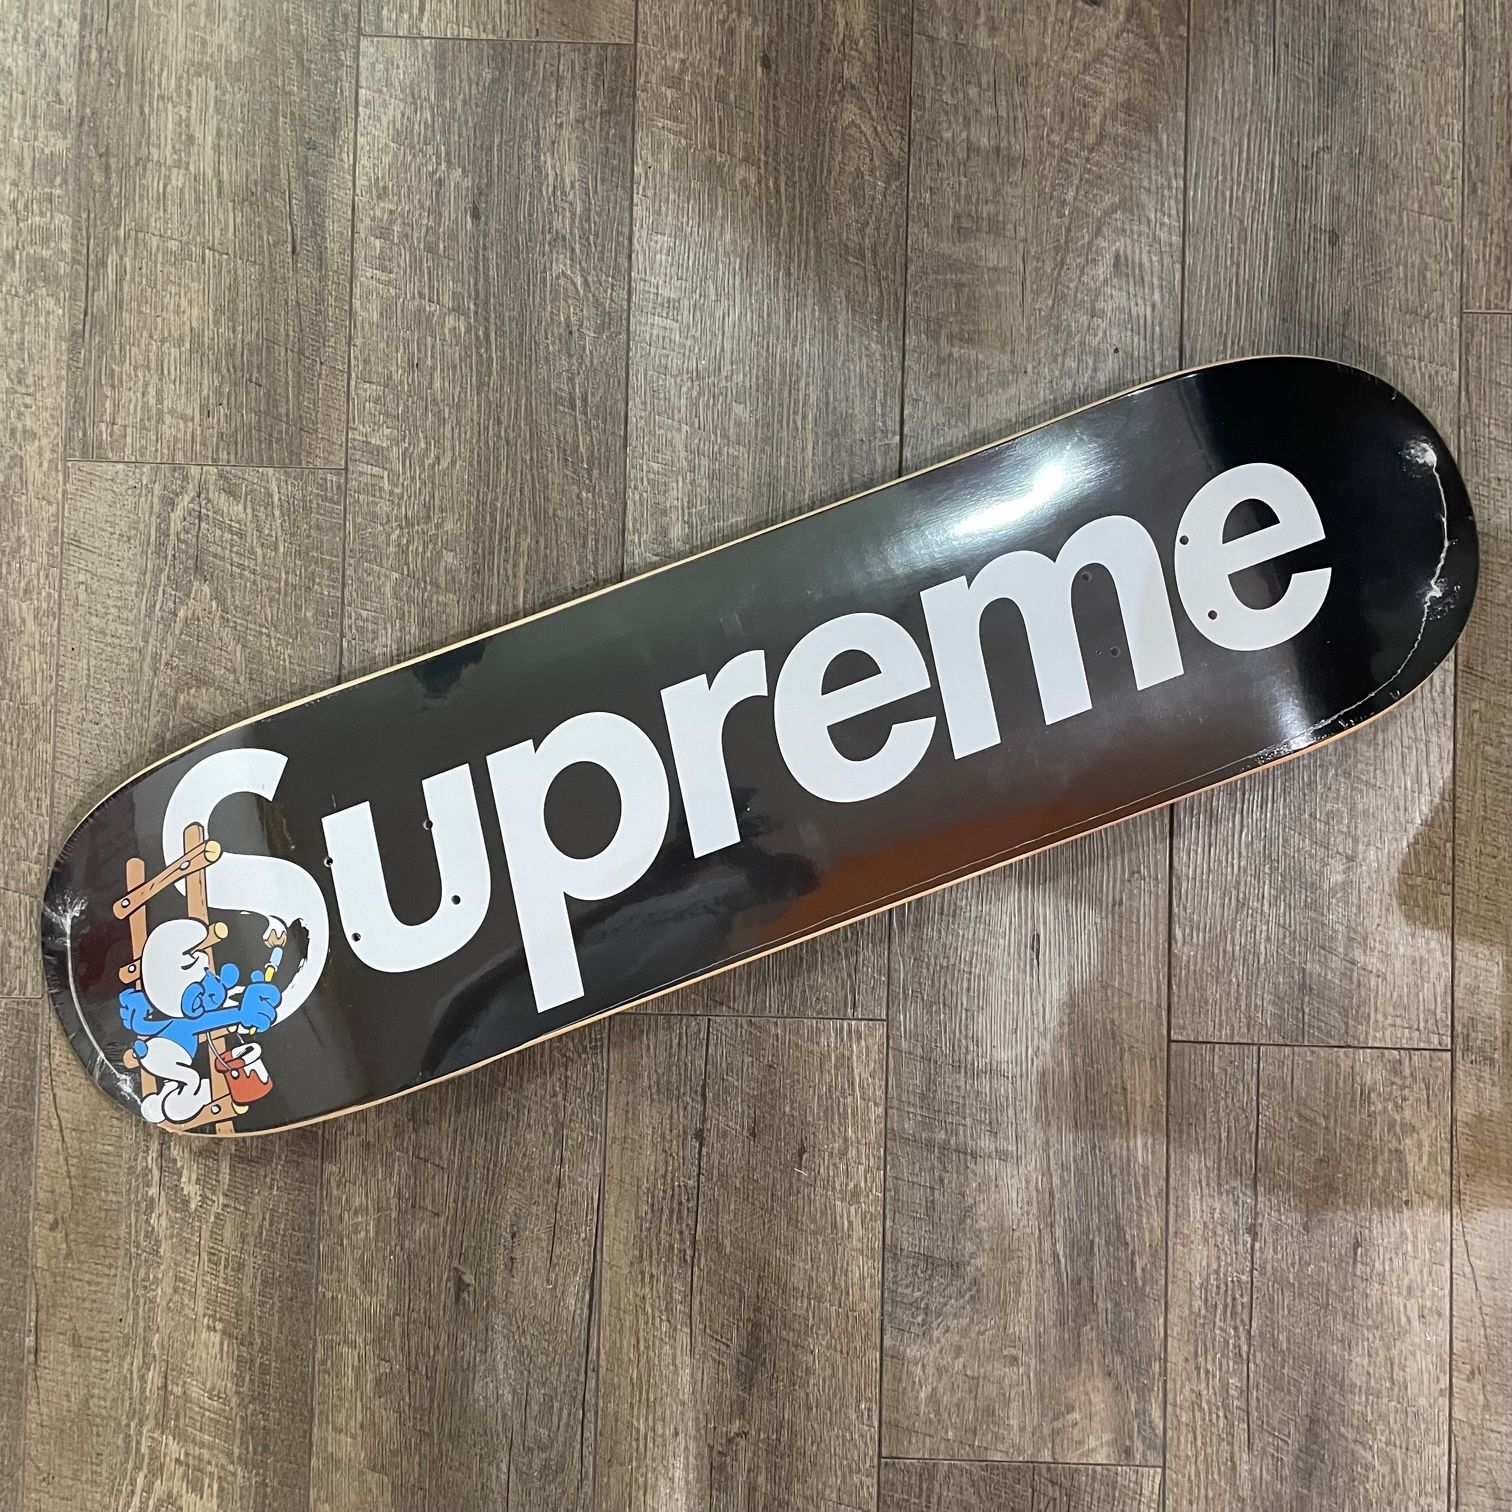 Supreme Smurfs Skateboard シュプリーム　スマーフ